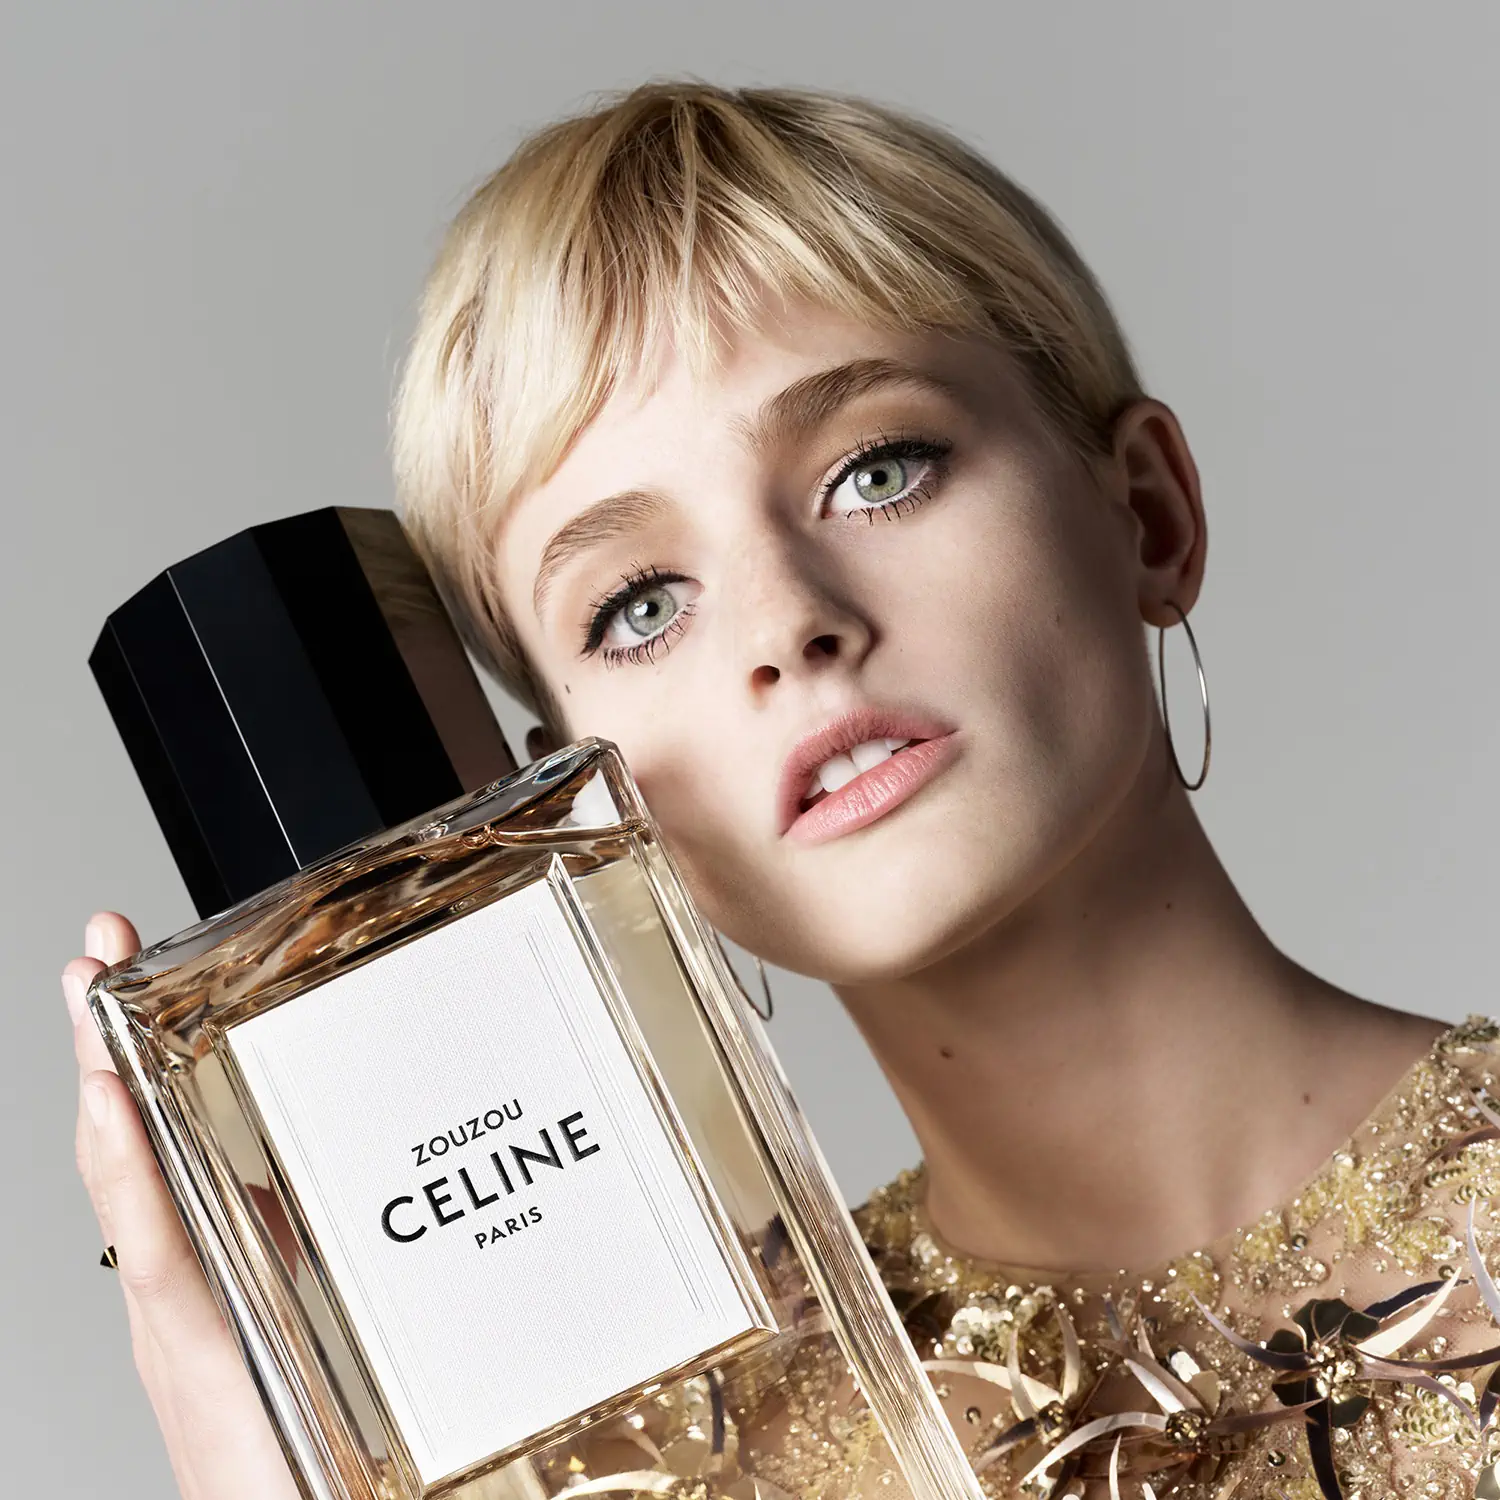 Esther-Rose McGregor enchants as the face of Celine's new fragrance Zouzou